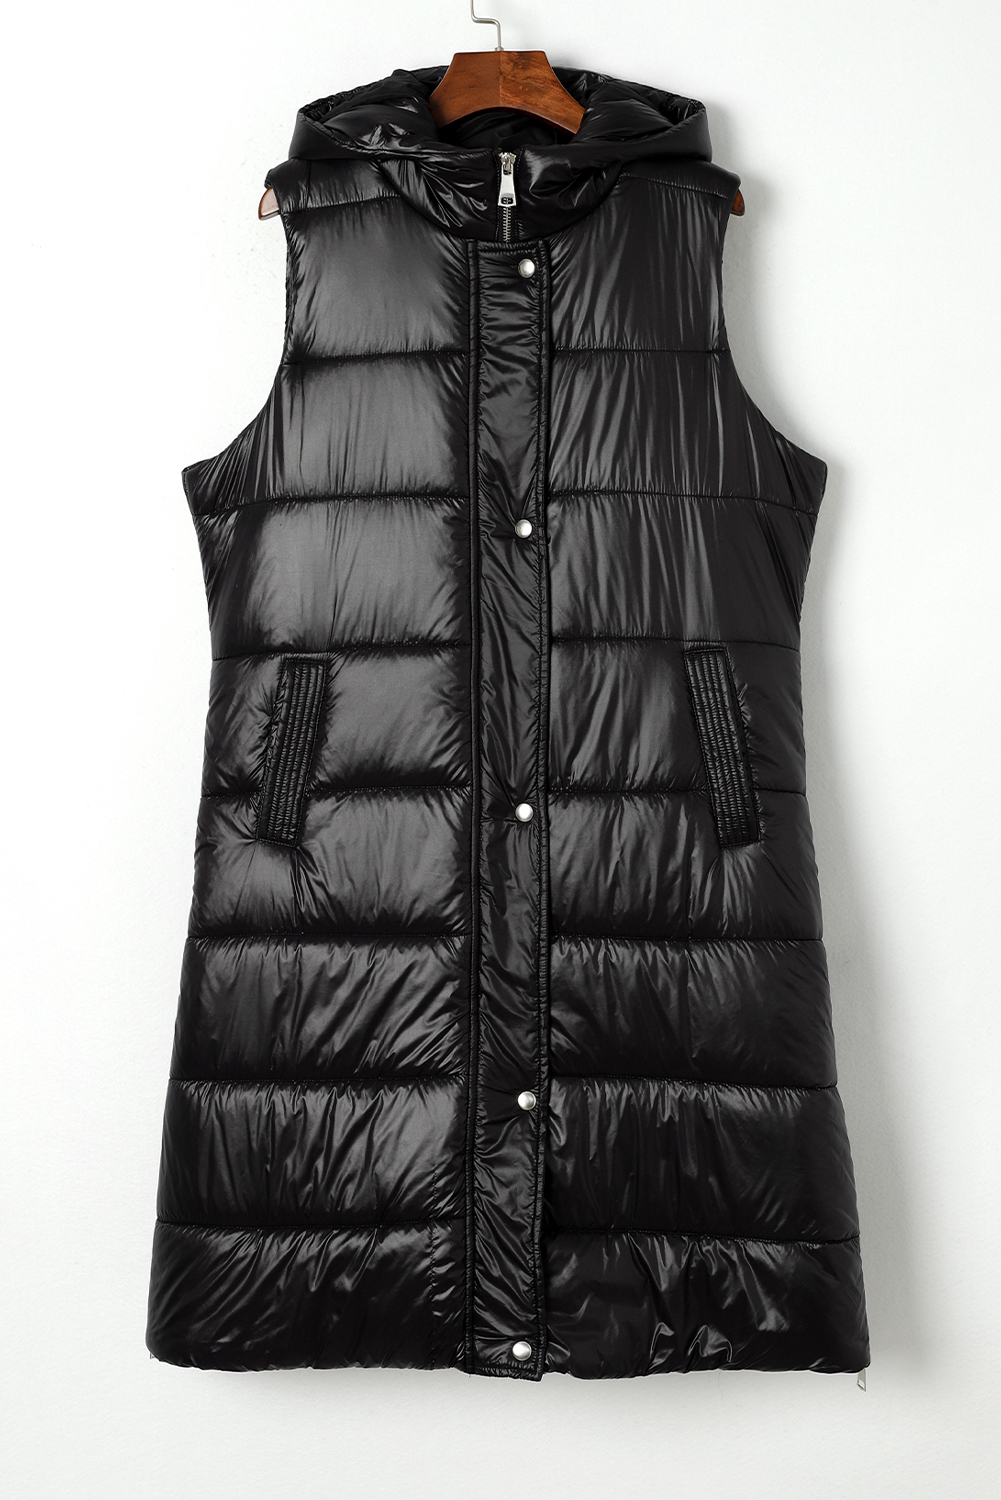 $20.24 Black Hooded Long Quilted Vest Coat Wholesale